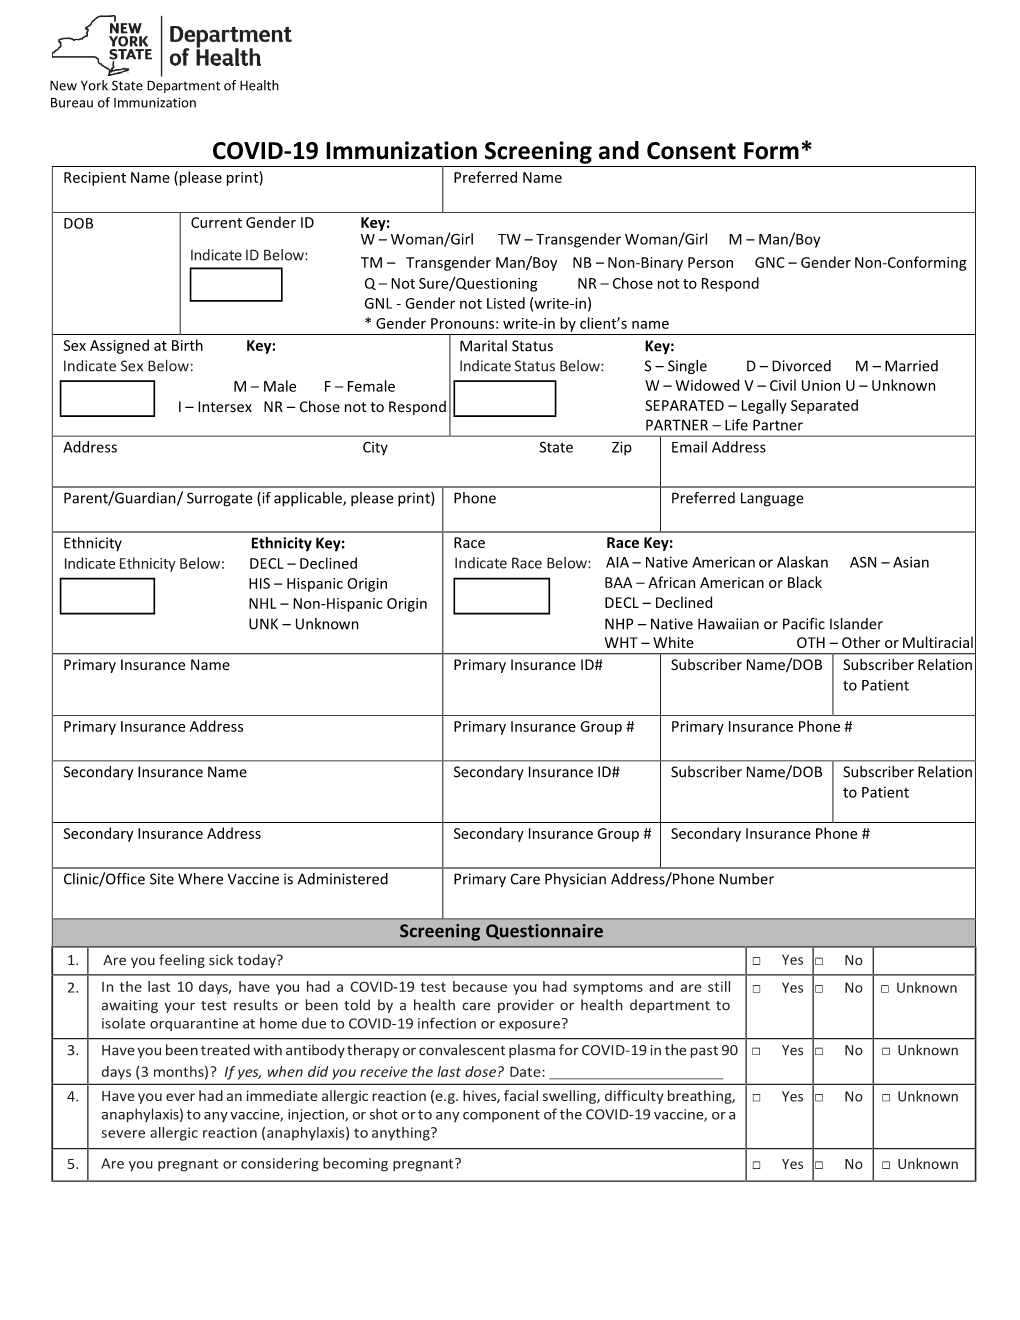 COVID-19 Immunization Screening and Consent Form* Recipient Name (Please Print) Preferred Name